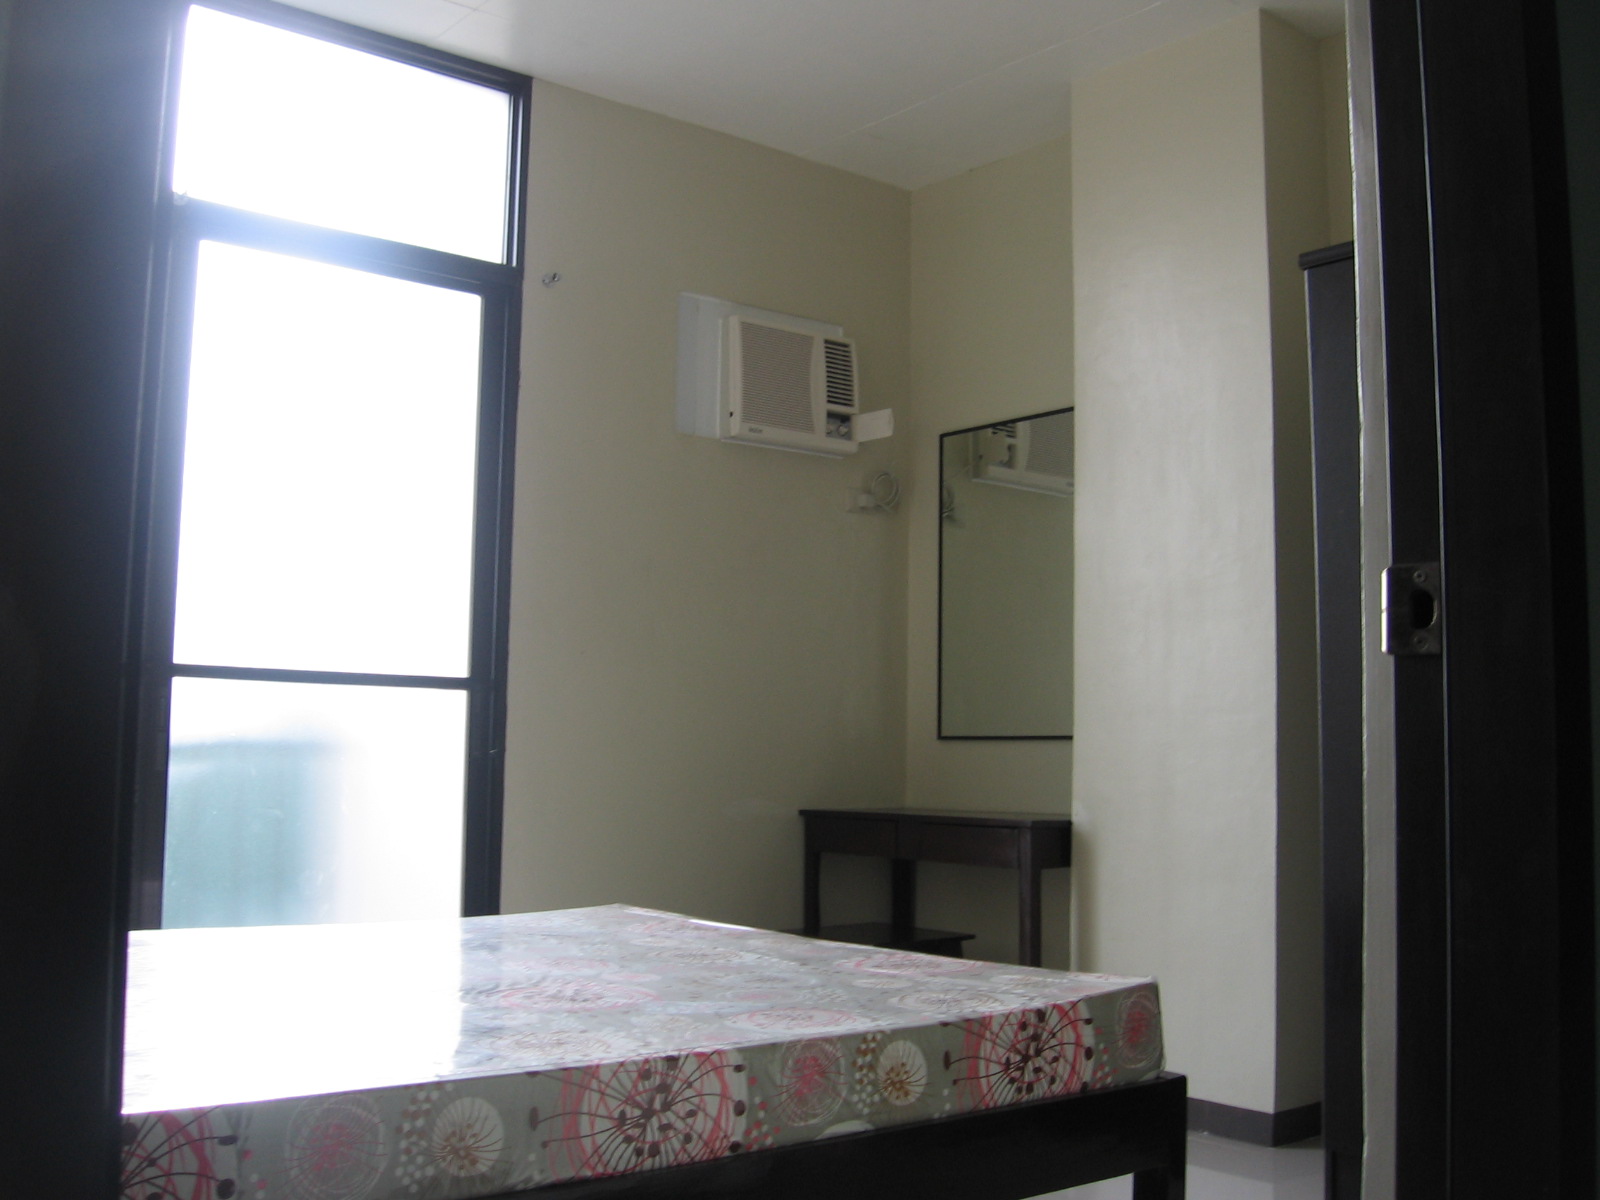 2-bedrooms-apartment-located-in-labangon-cebu-city